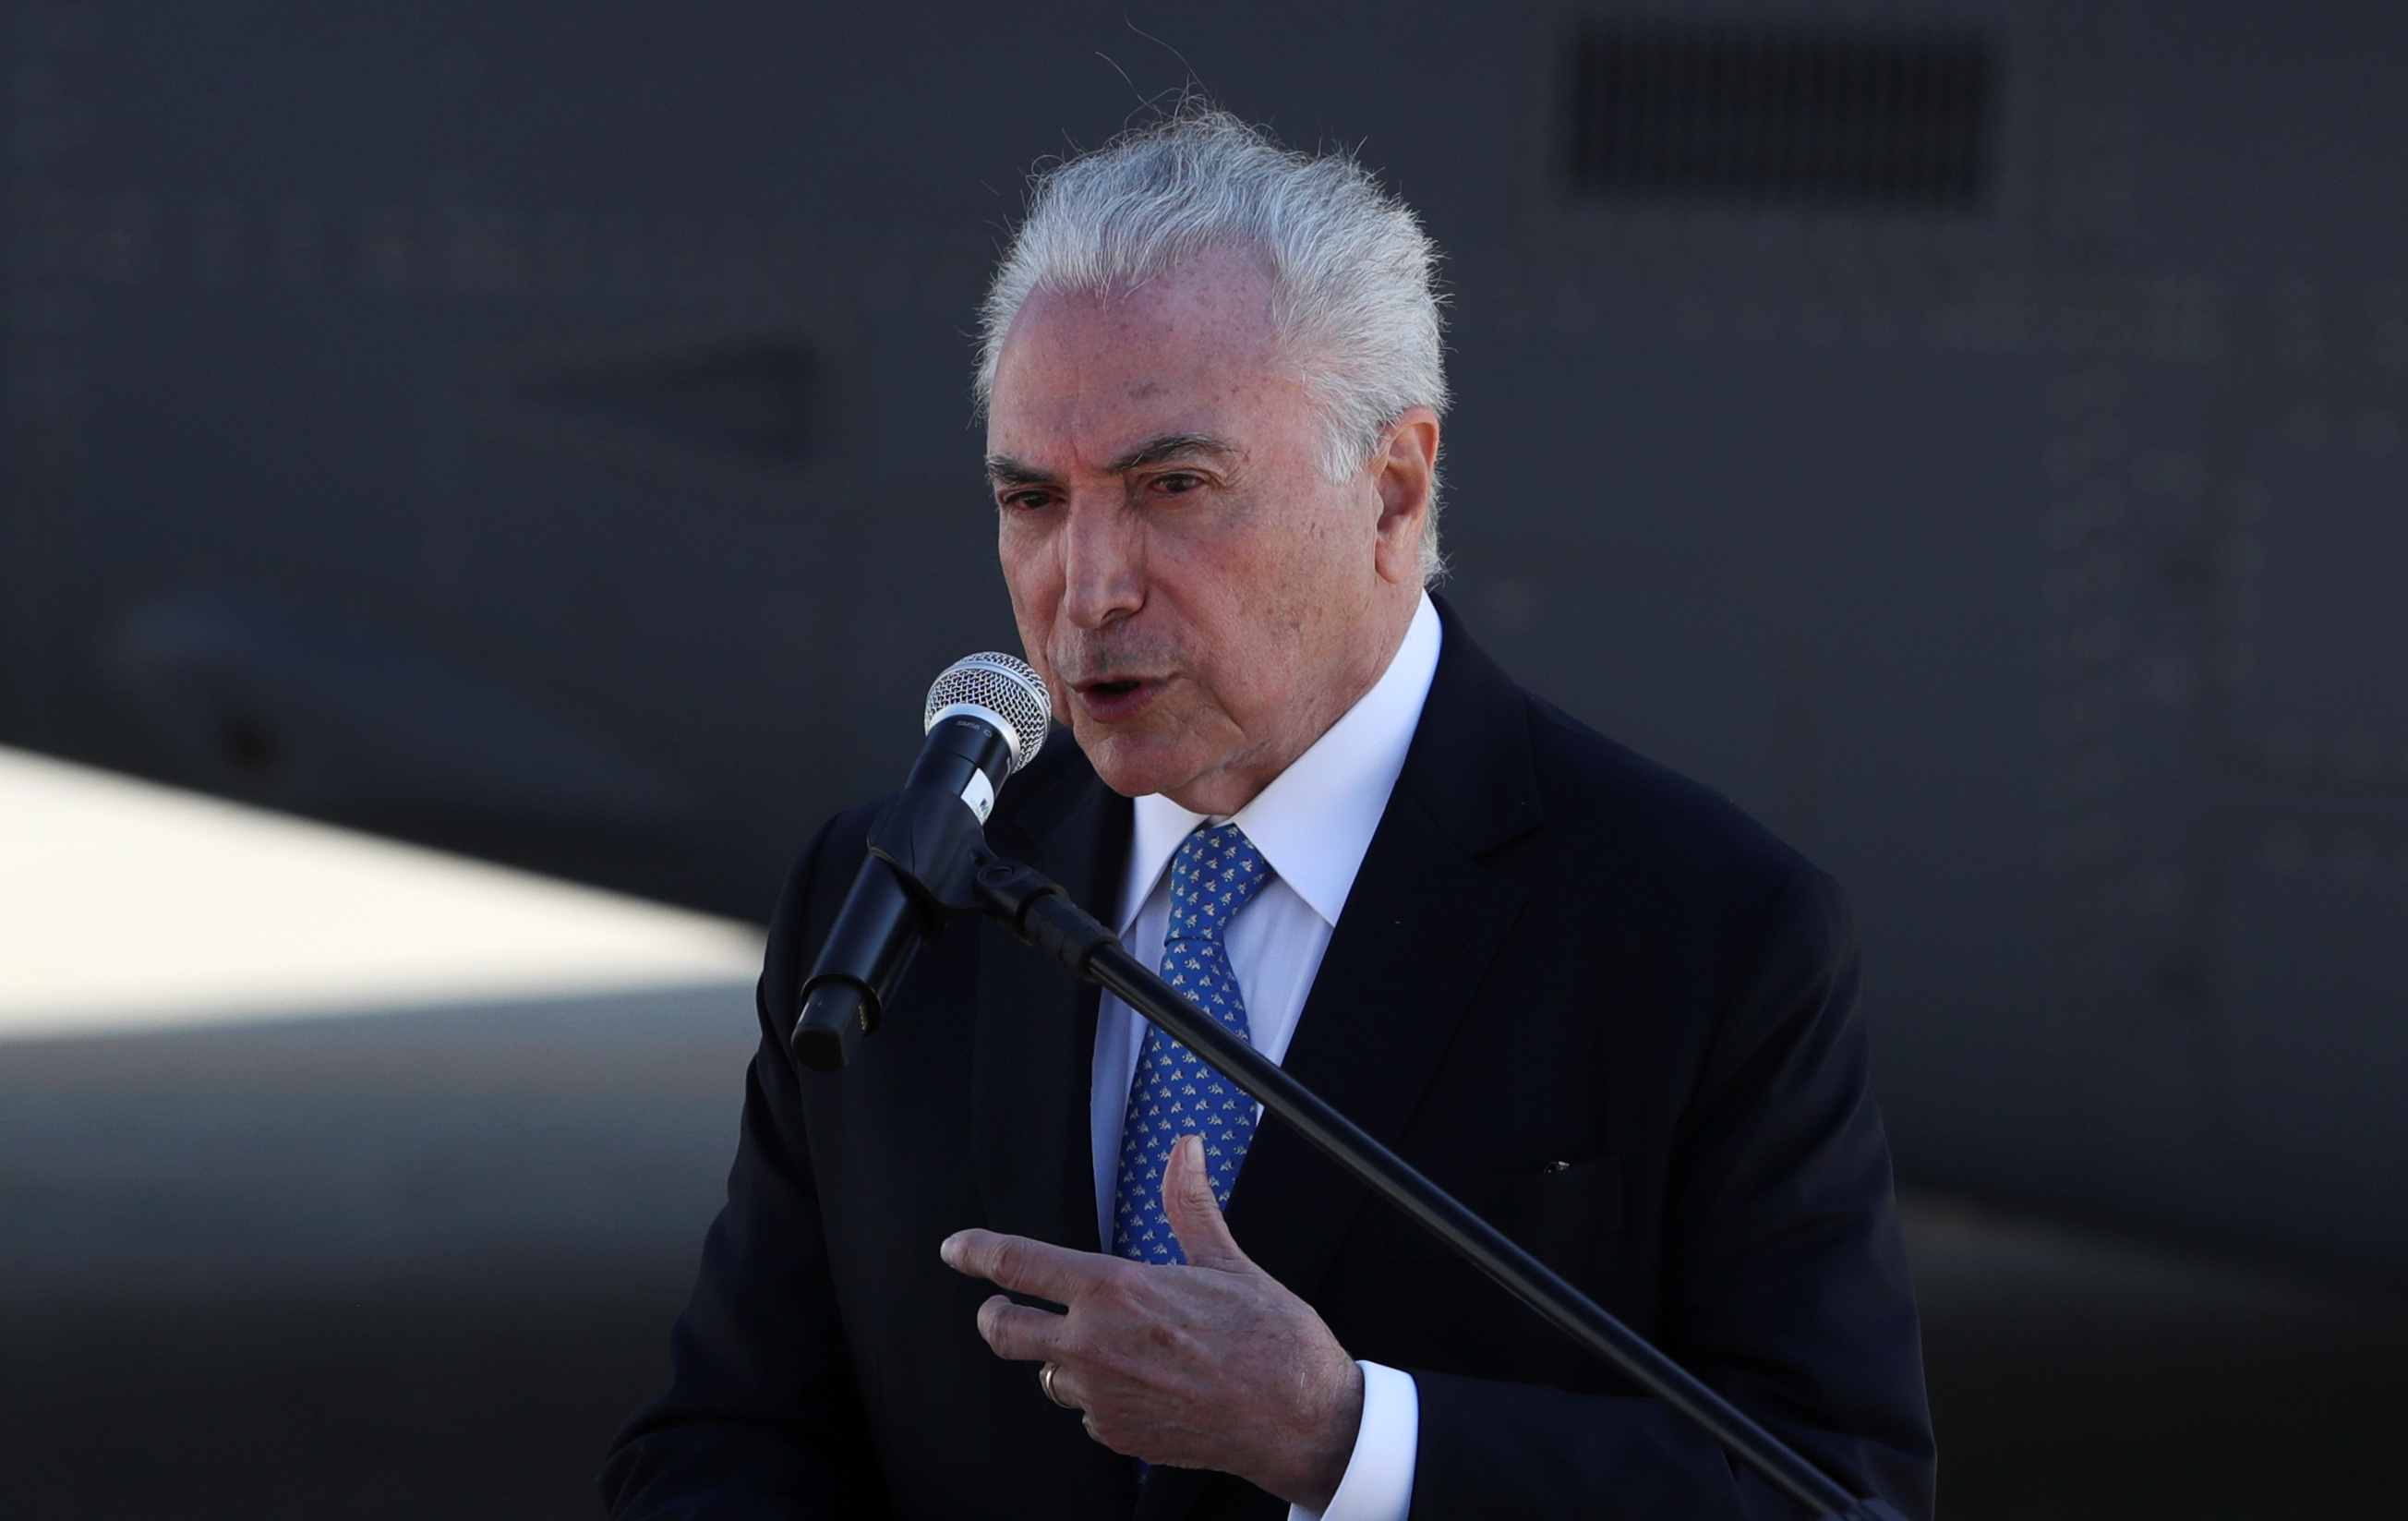 Michel Temer le respondió a Lula da Silva: “Sé cómo lidiar con bandidos”. (REUTERS)